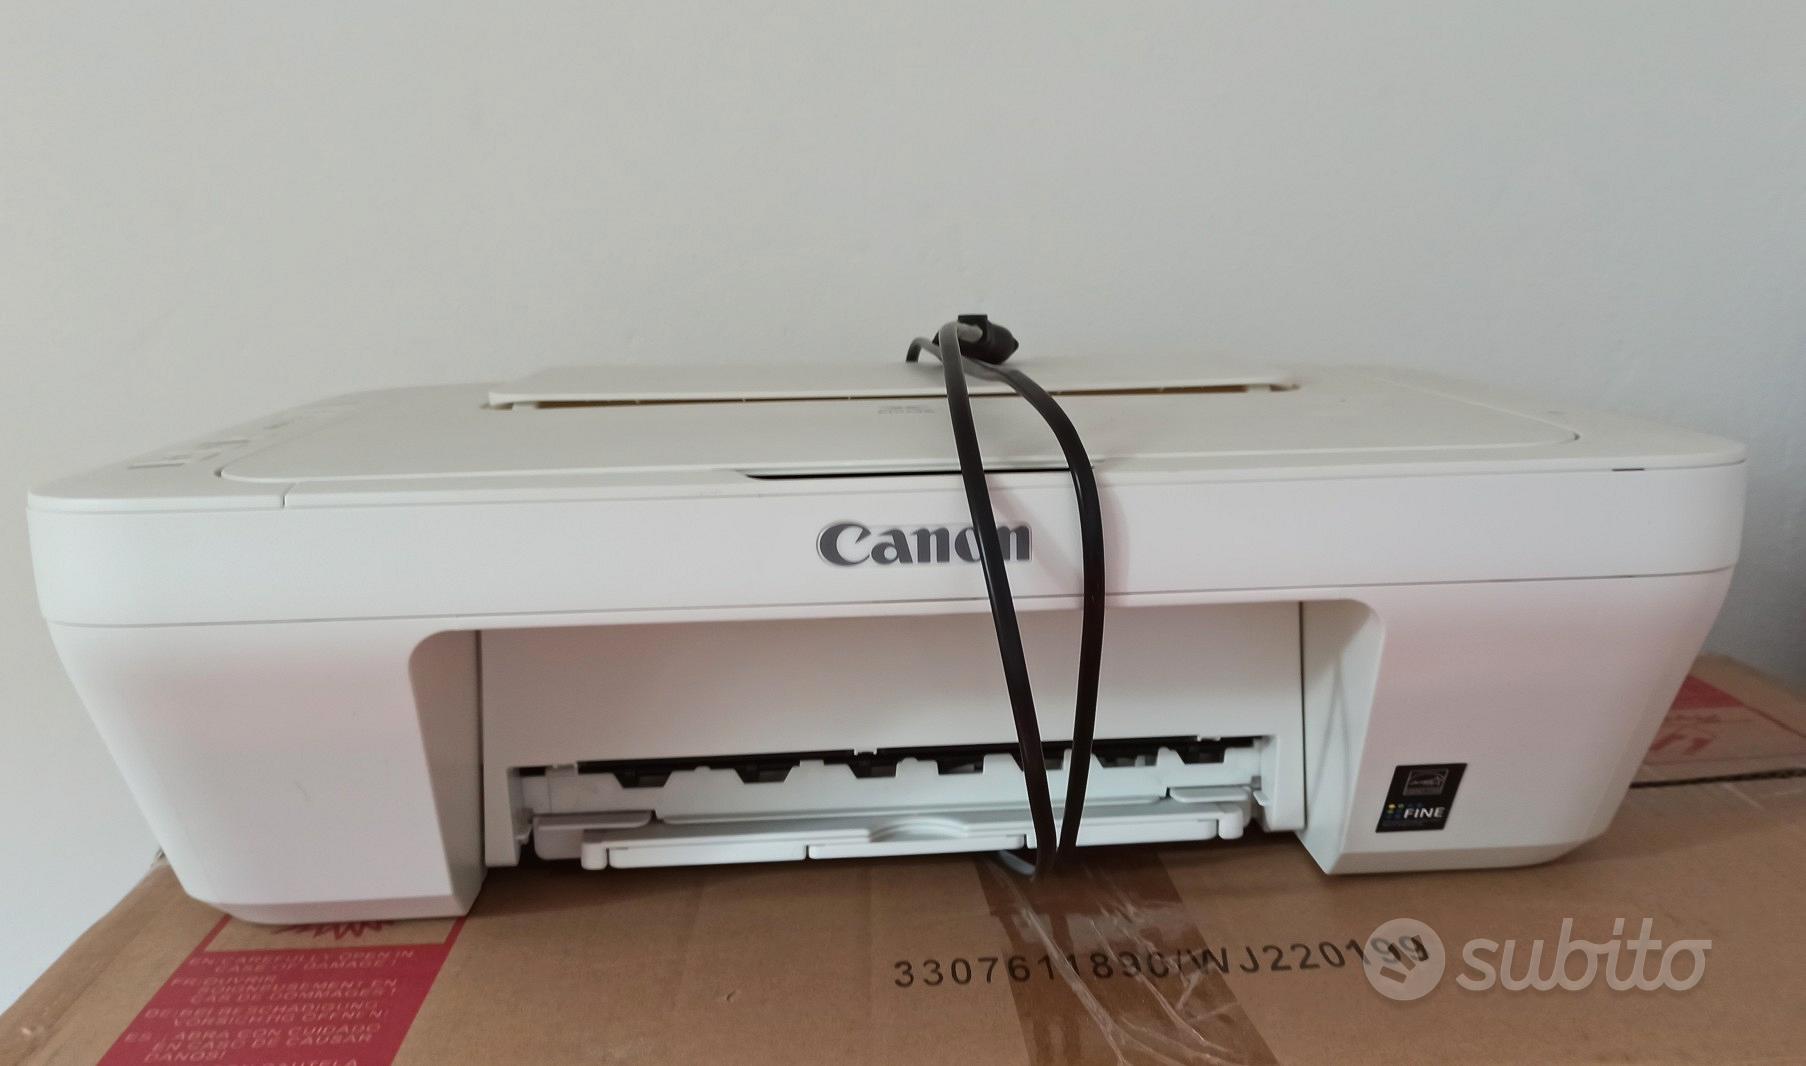 Stampante Canon - Informatica In vendita a Firenze